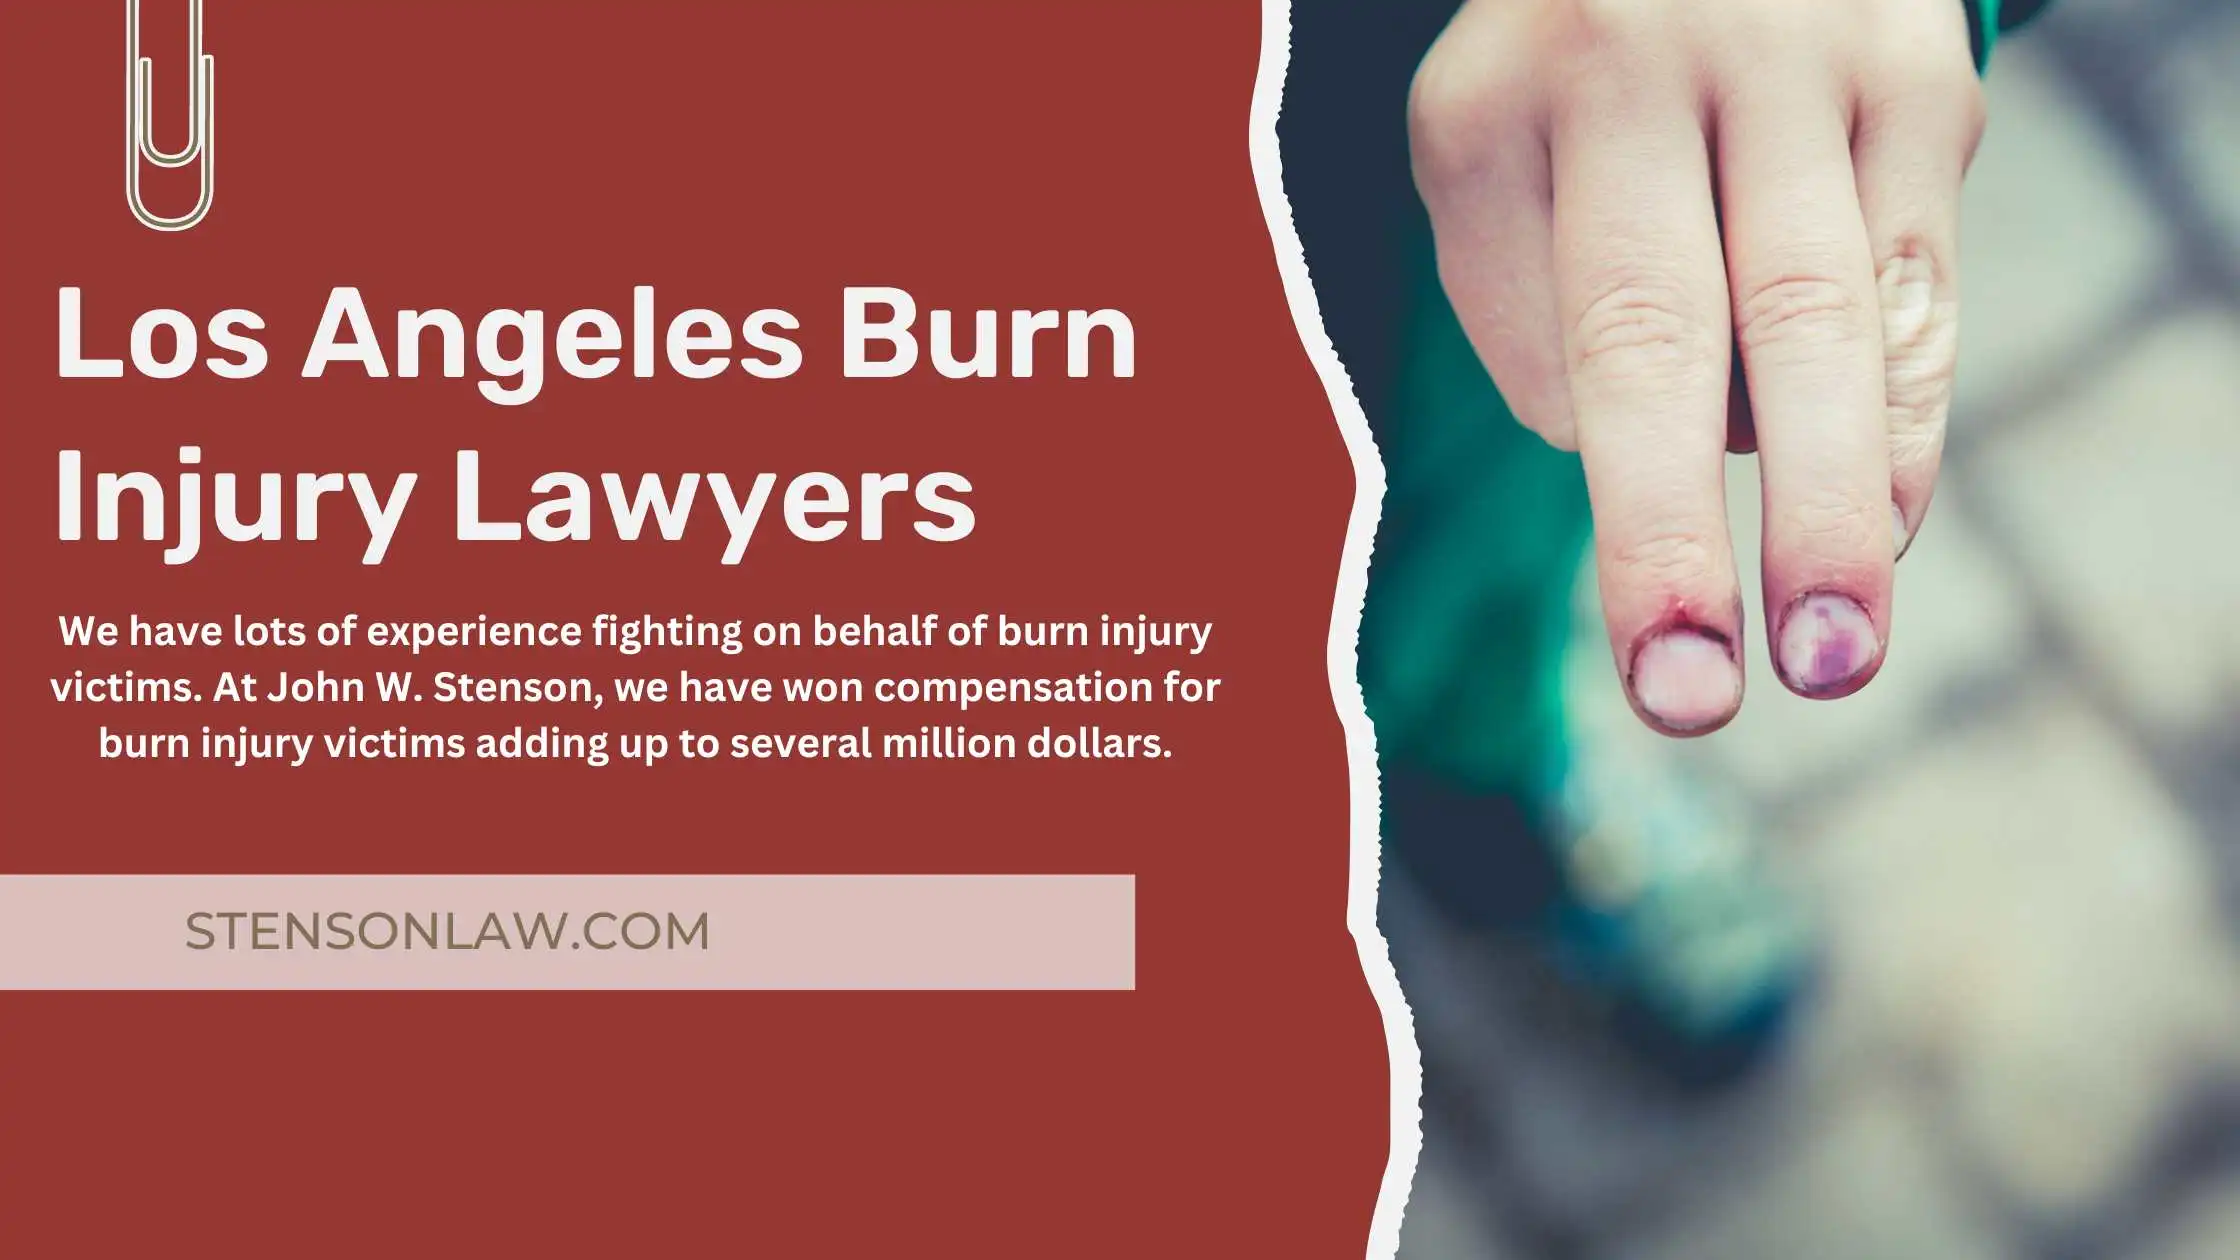 Los Angeles Burn Injury Lawyers